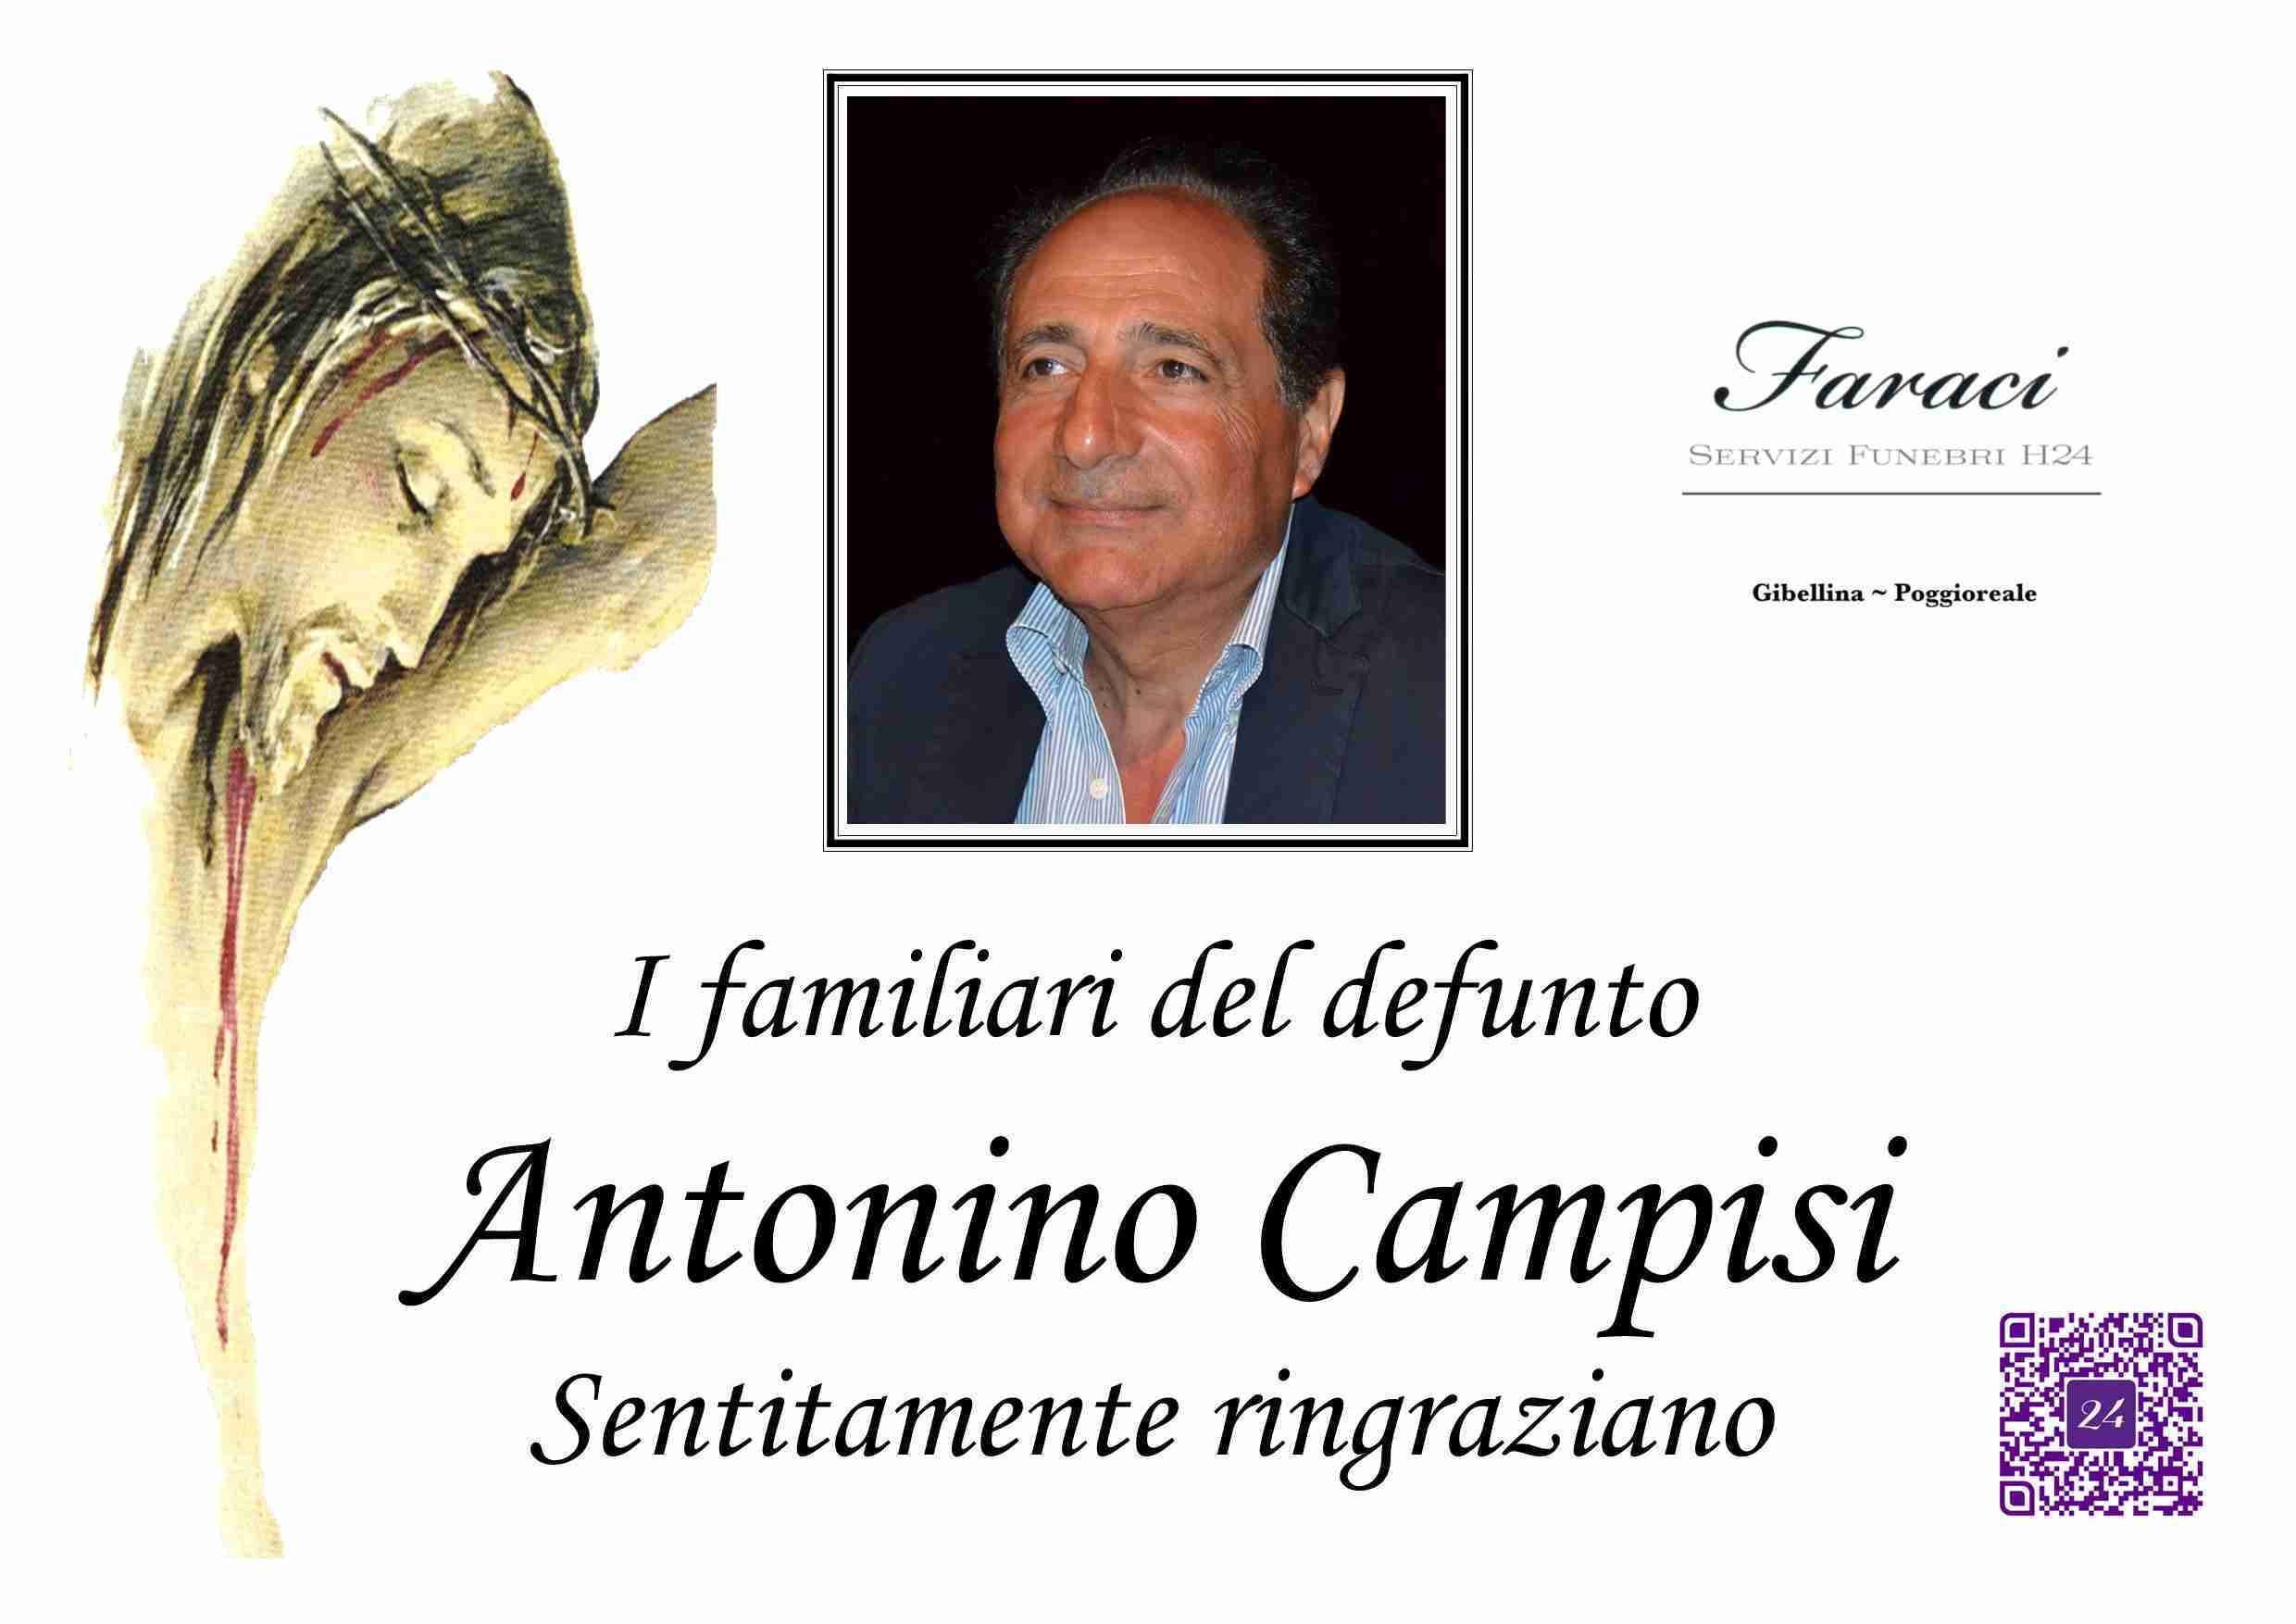 Antonino Campisi